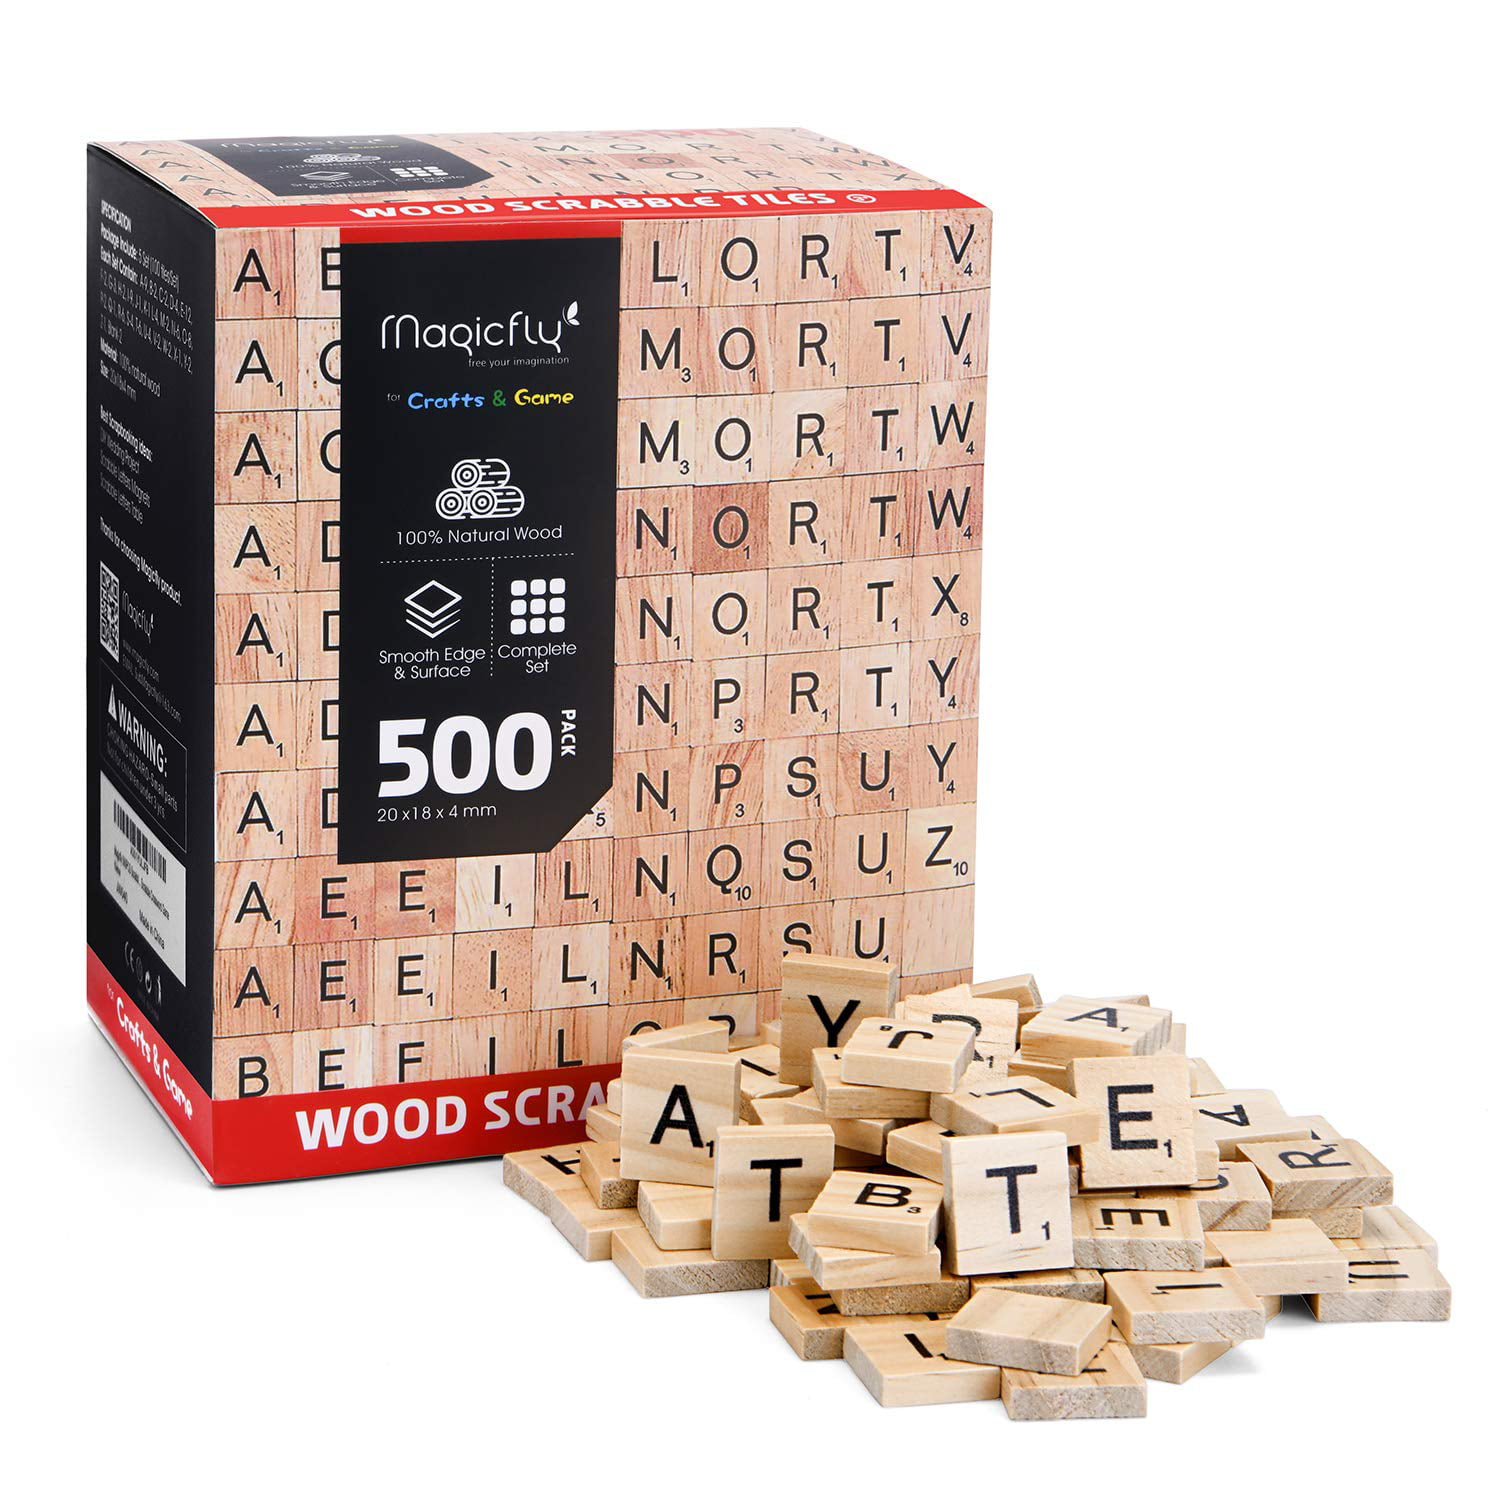 Luxtrip 300 Pcs Wooden Scrabble Tiles Wooden Scrabble Tiles A-Z Capital Letters for Crafts Scrabble Tiles Wooden Scrabble Word Letter Board Game DIY Wood Gift Decoration 